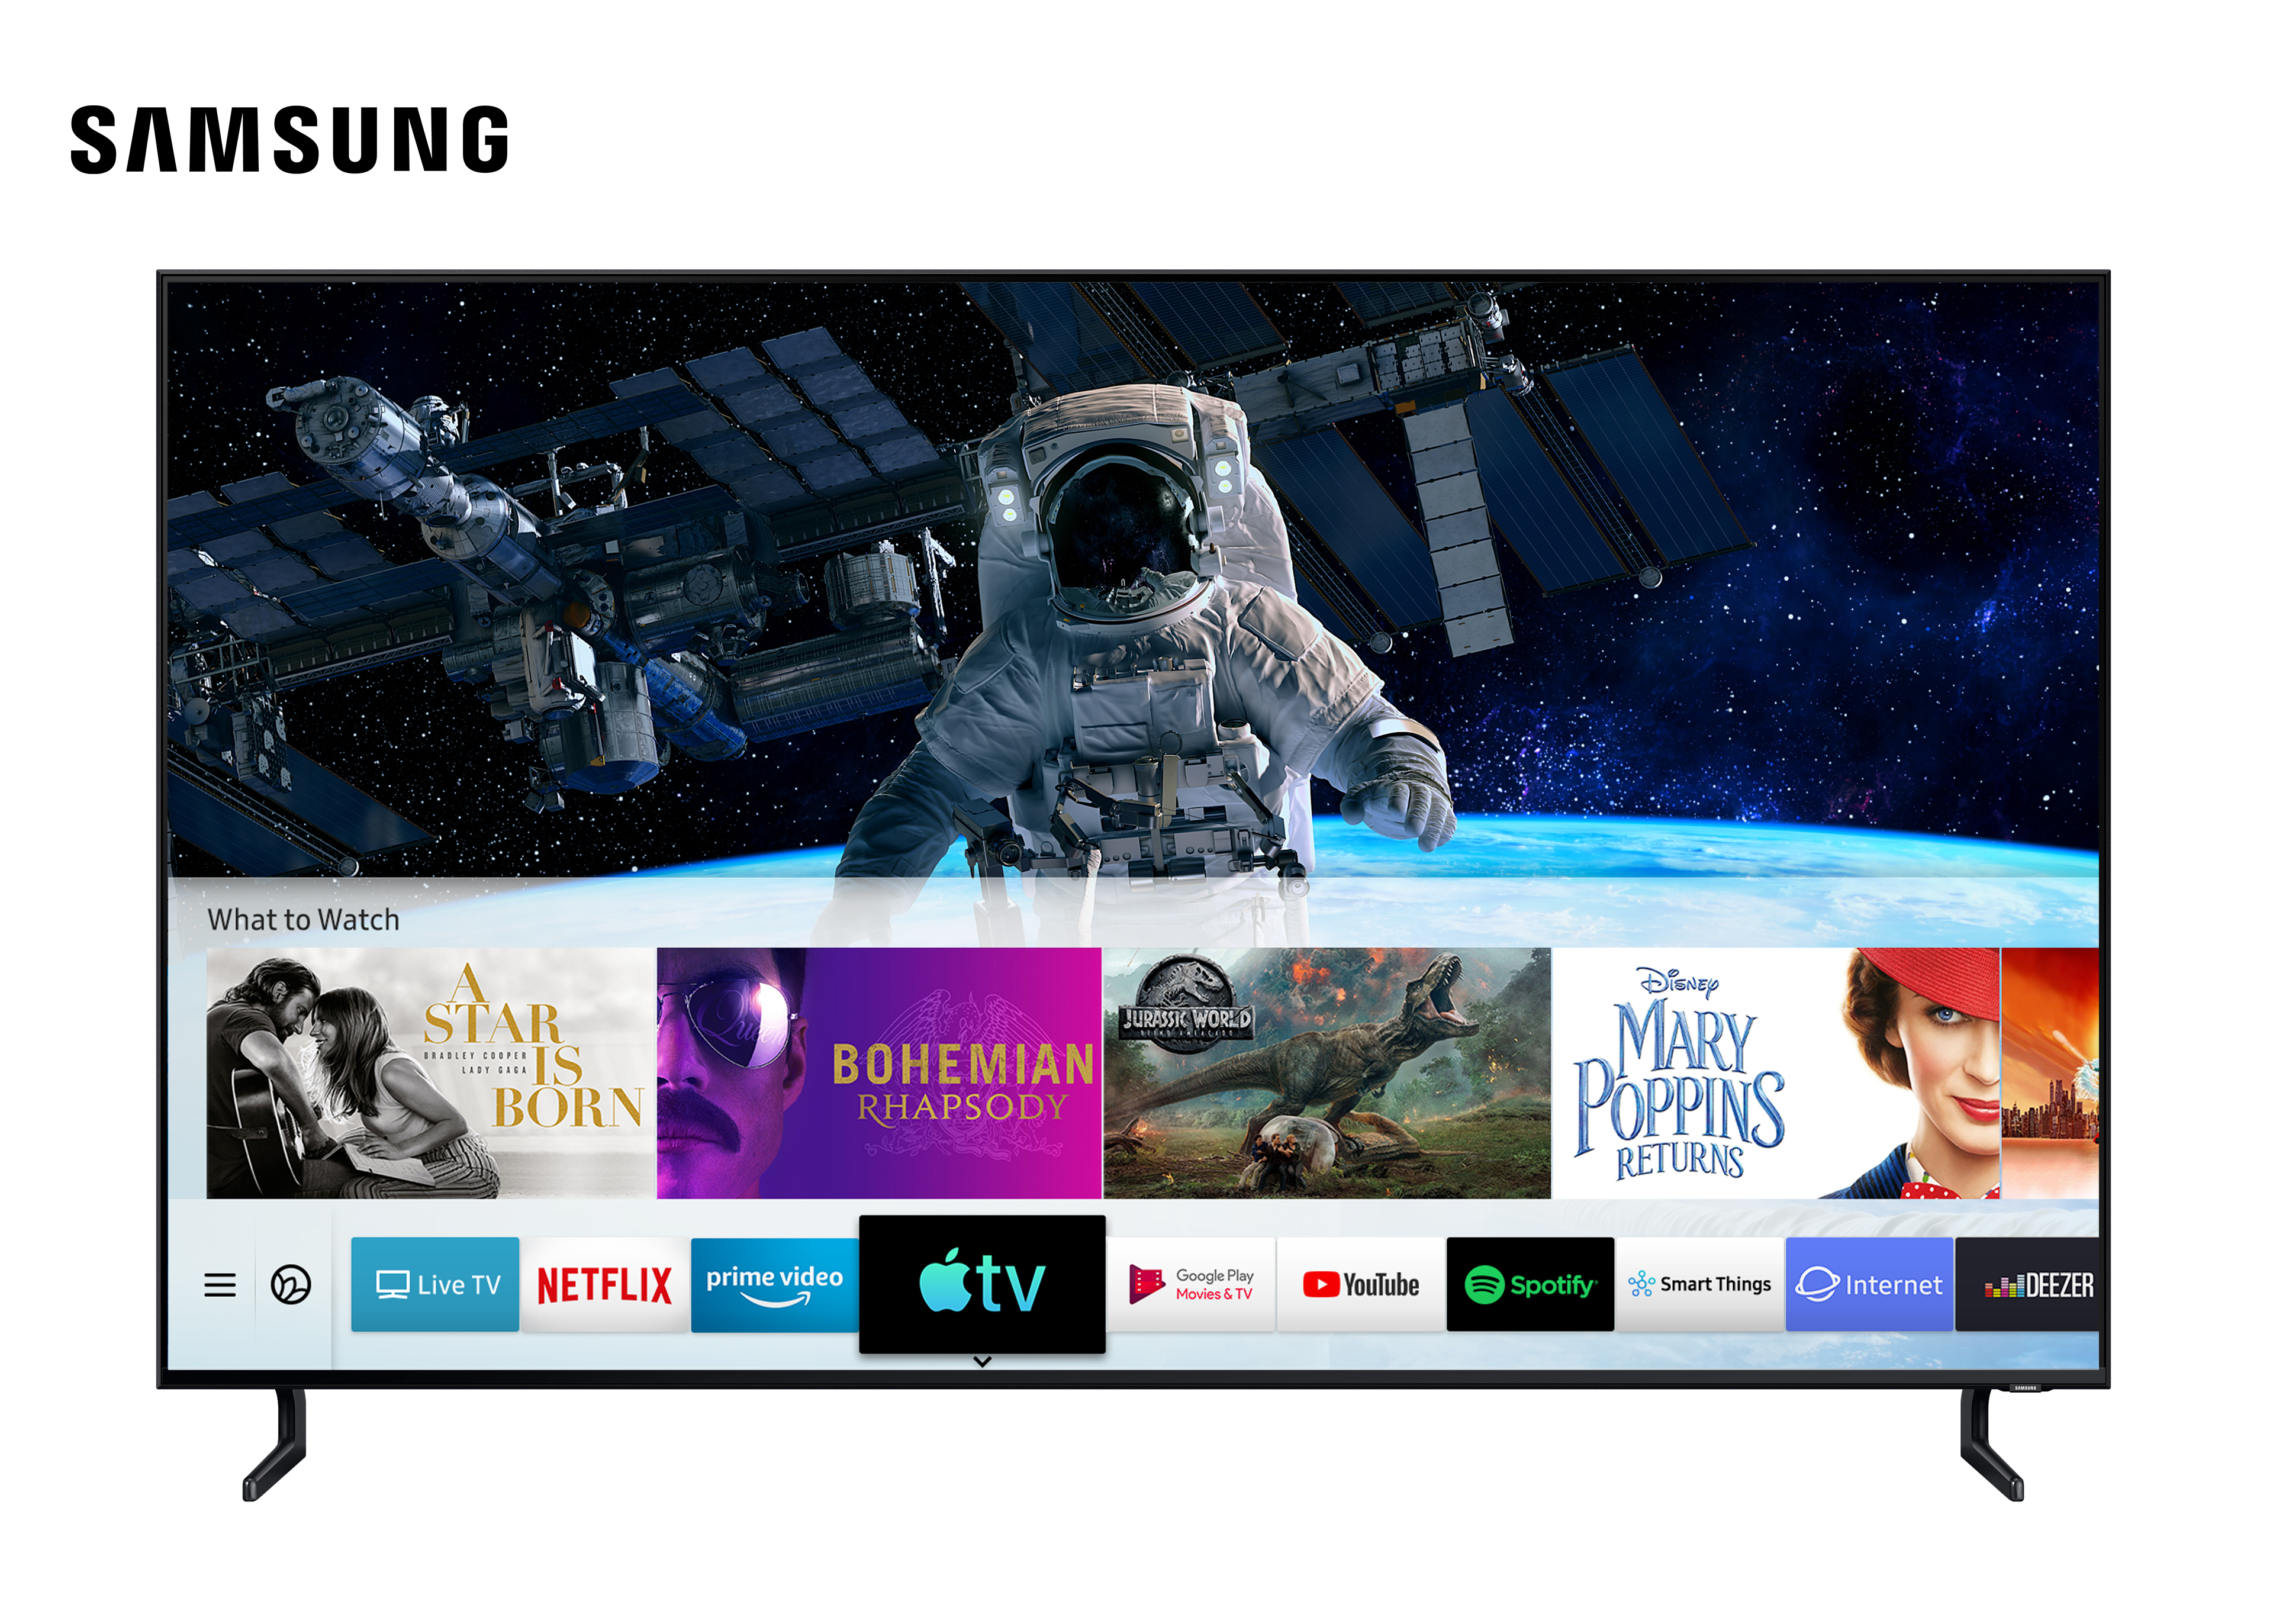 Samsung Apple TV AirPlay 2